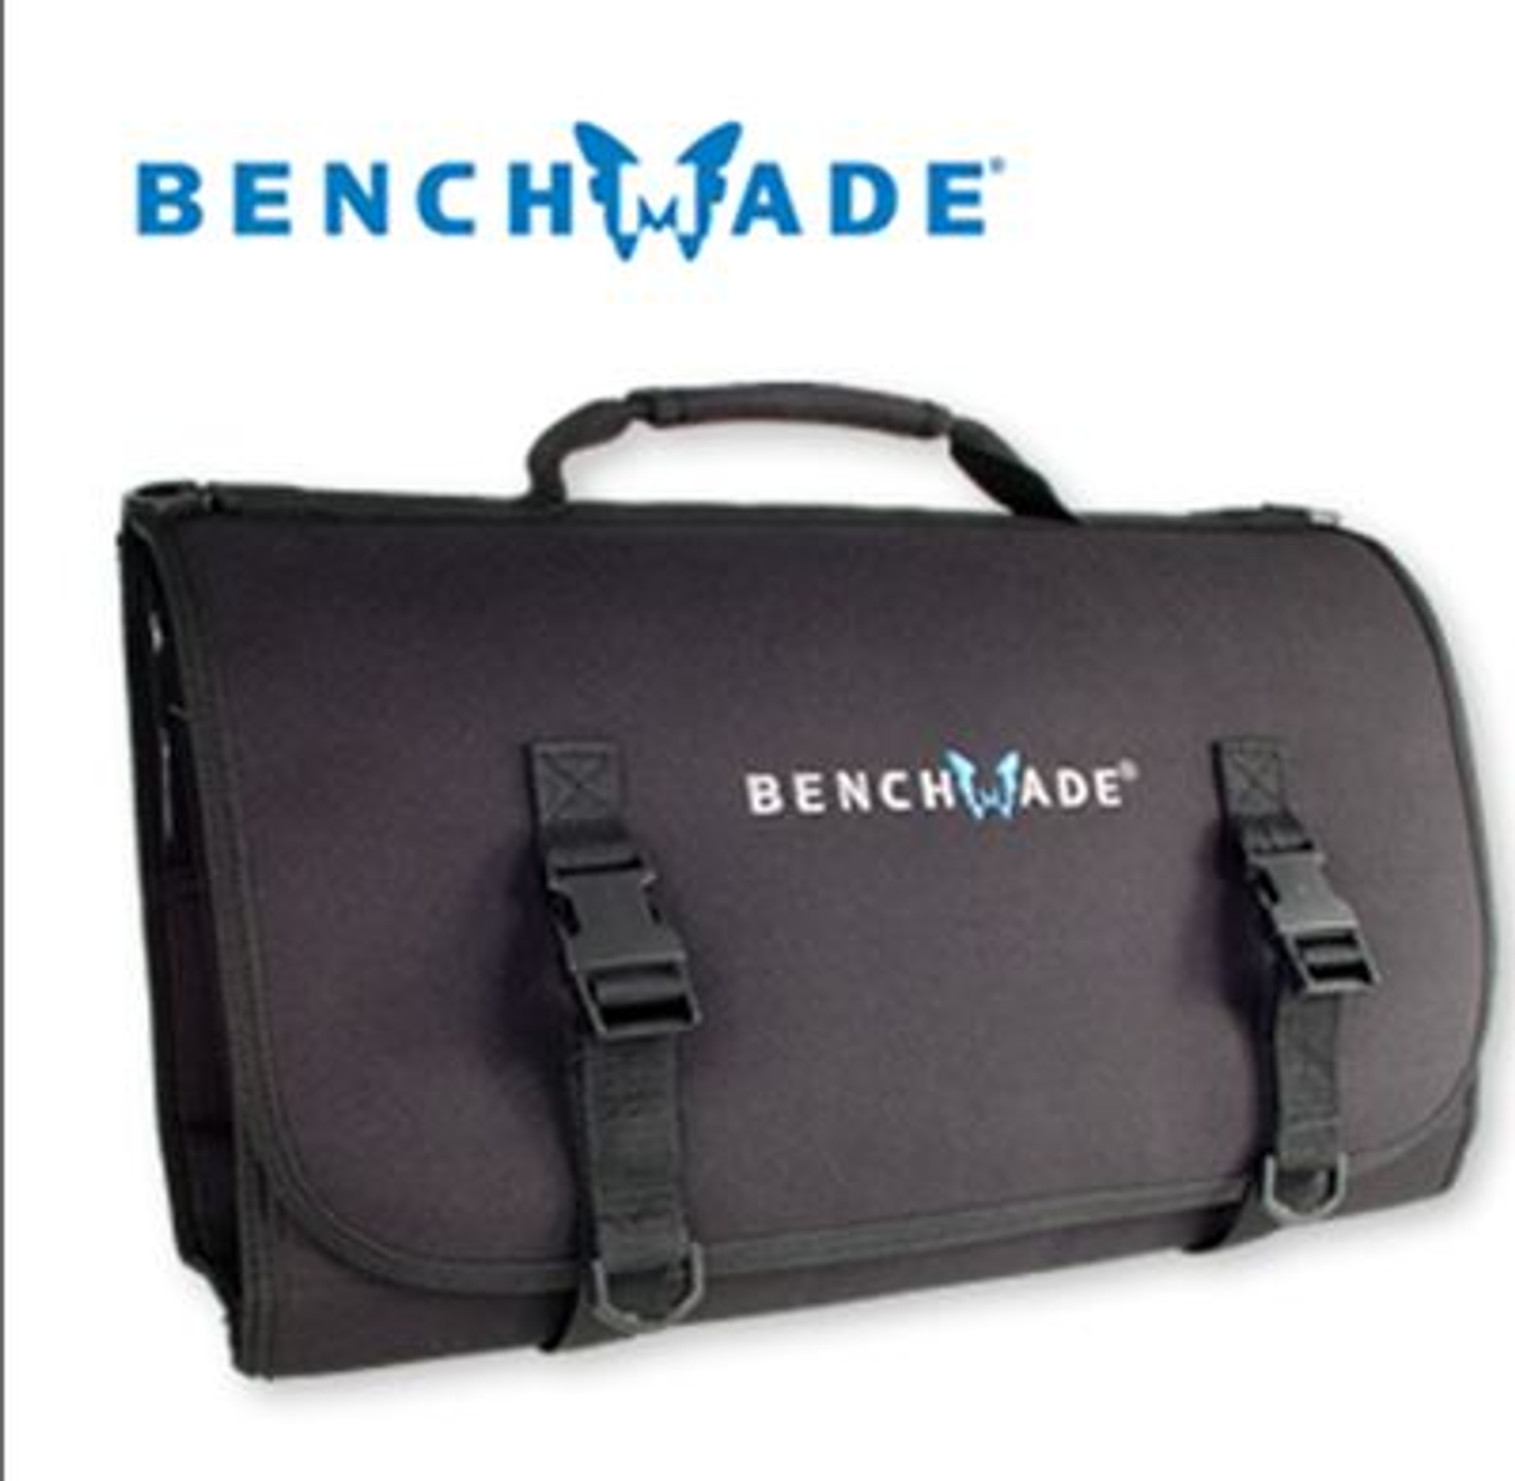 Benchmade Brag-Bag